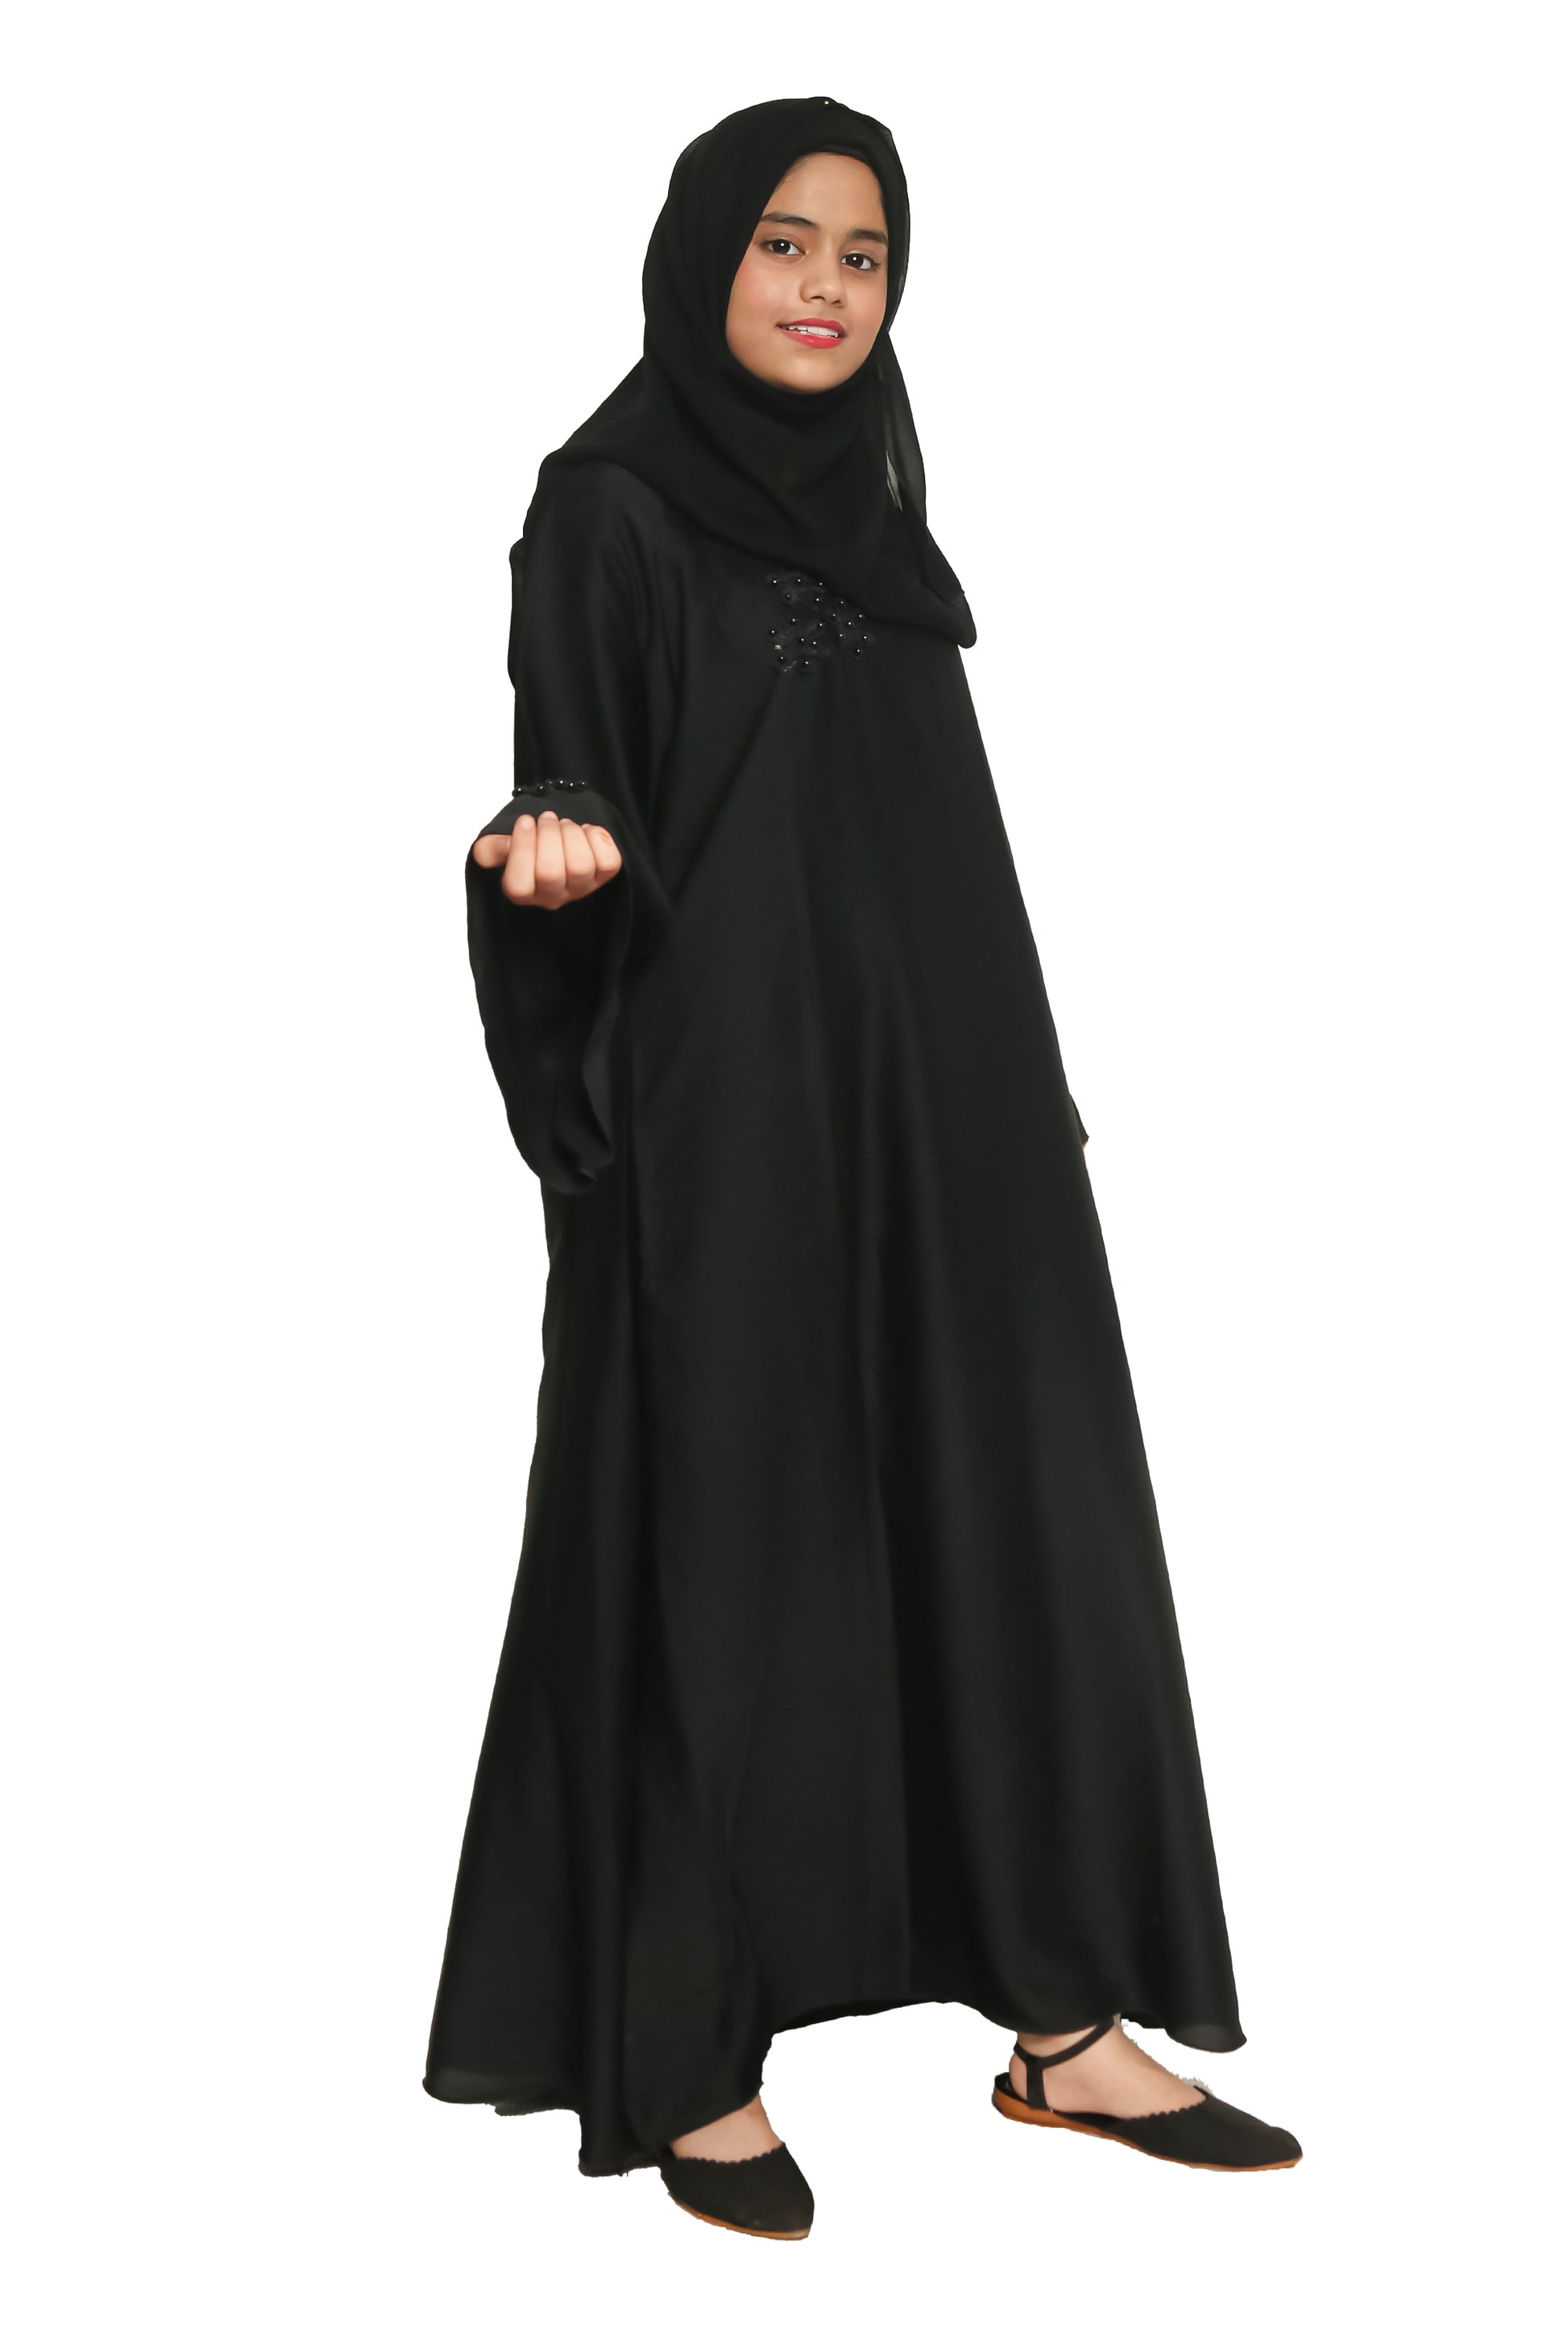 Modest City Self Design Plain Black Nida with Flower Abaya or Burqa With Hijab for Women & Girls-Series Laiba